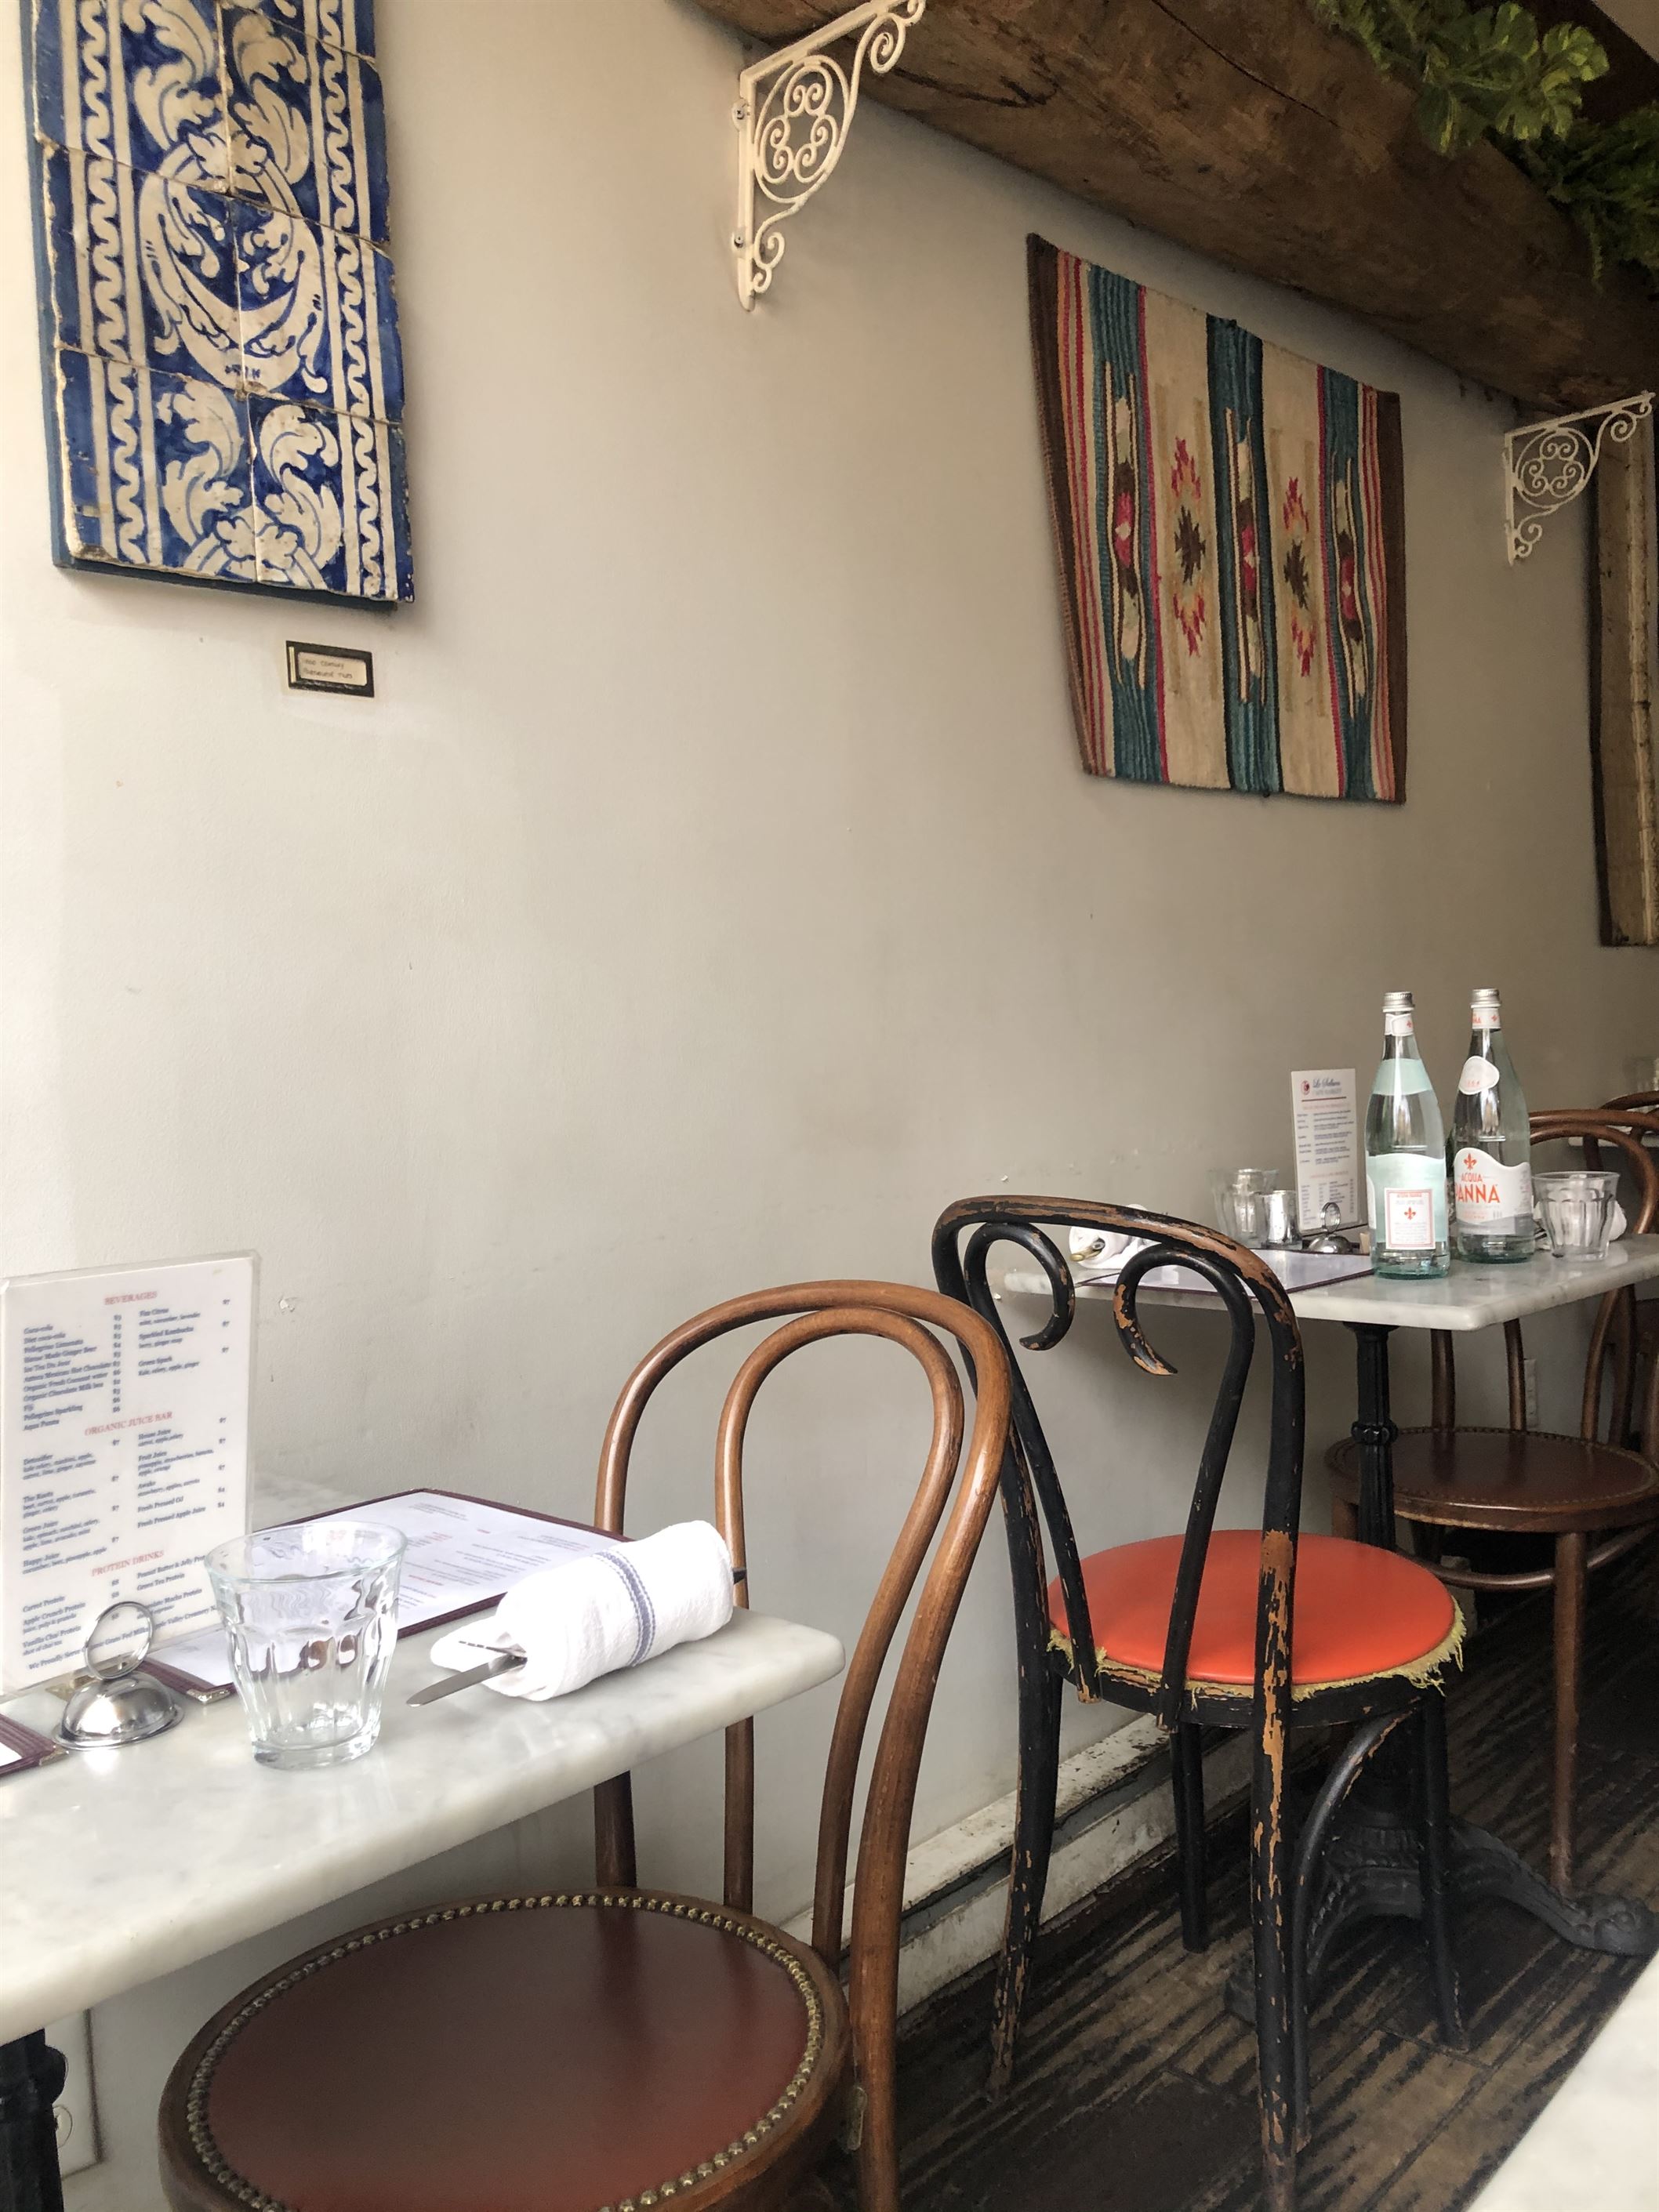 Le Salbuen Cafe offers a European escape for many in Montclair. Photo courtesy of Alyssa Smolen